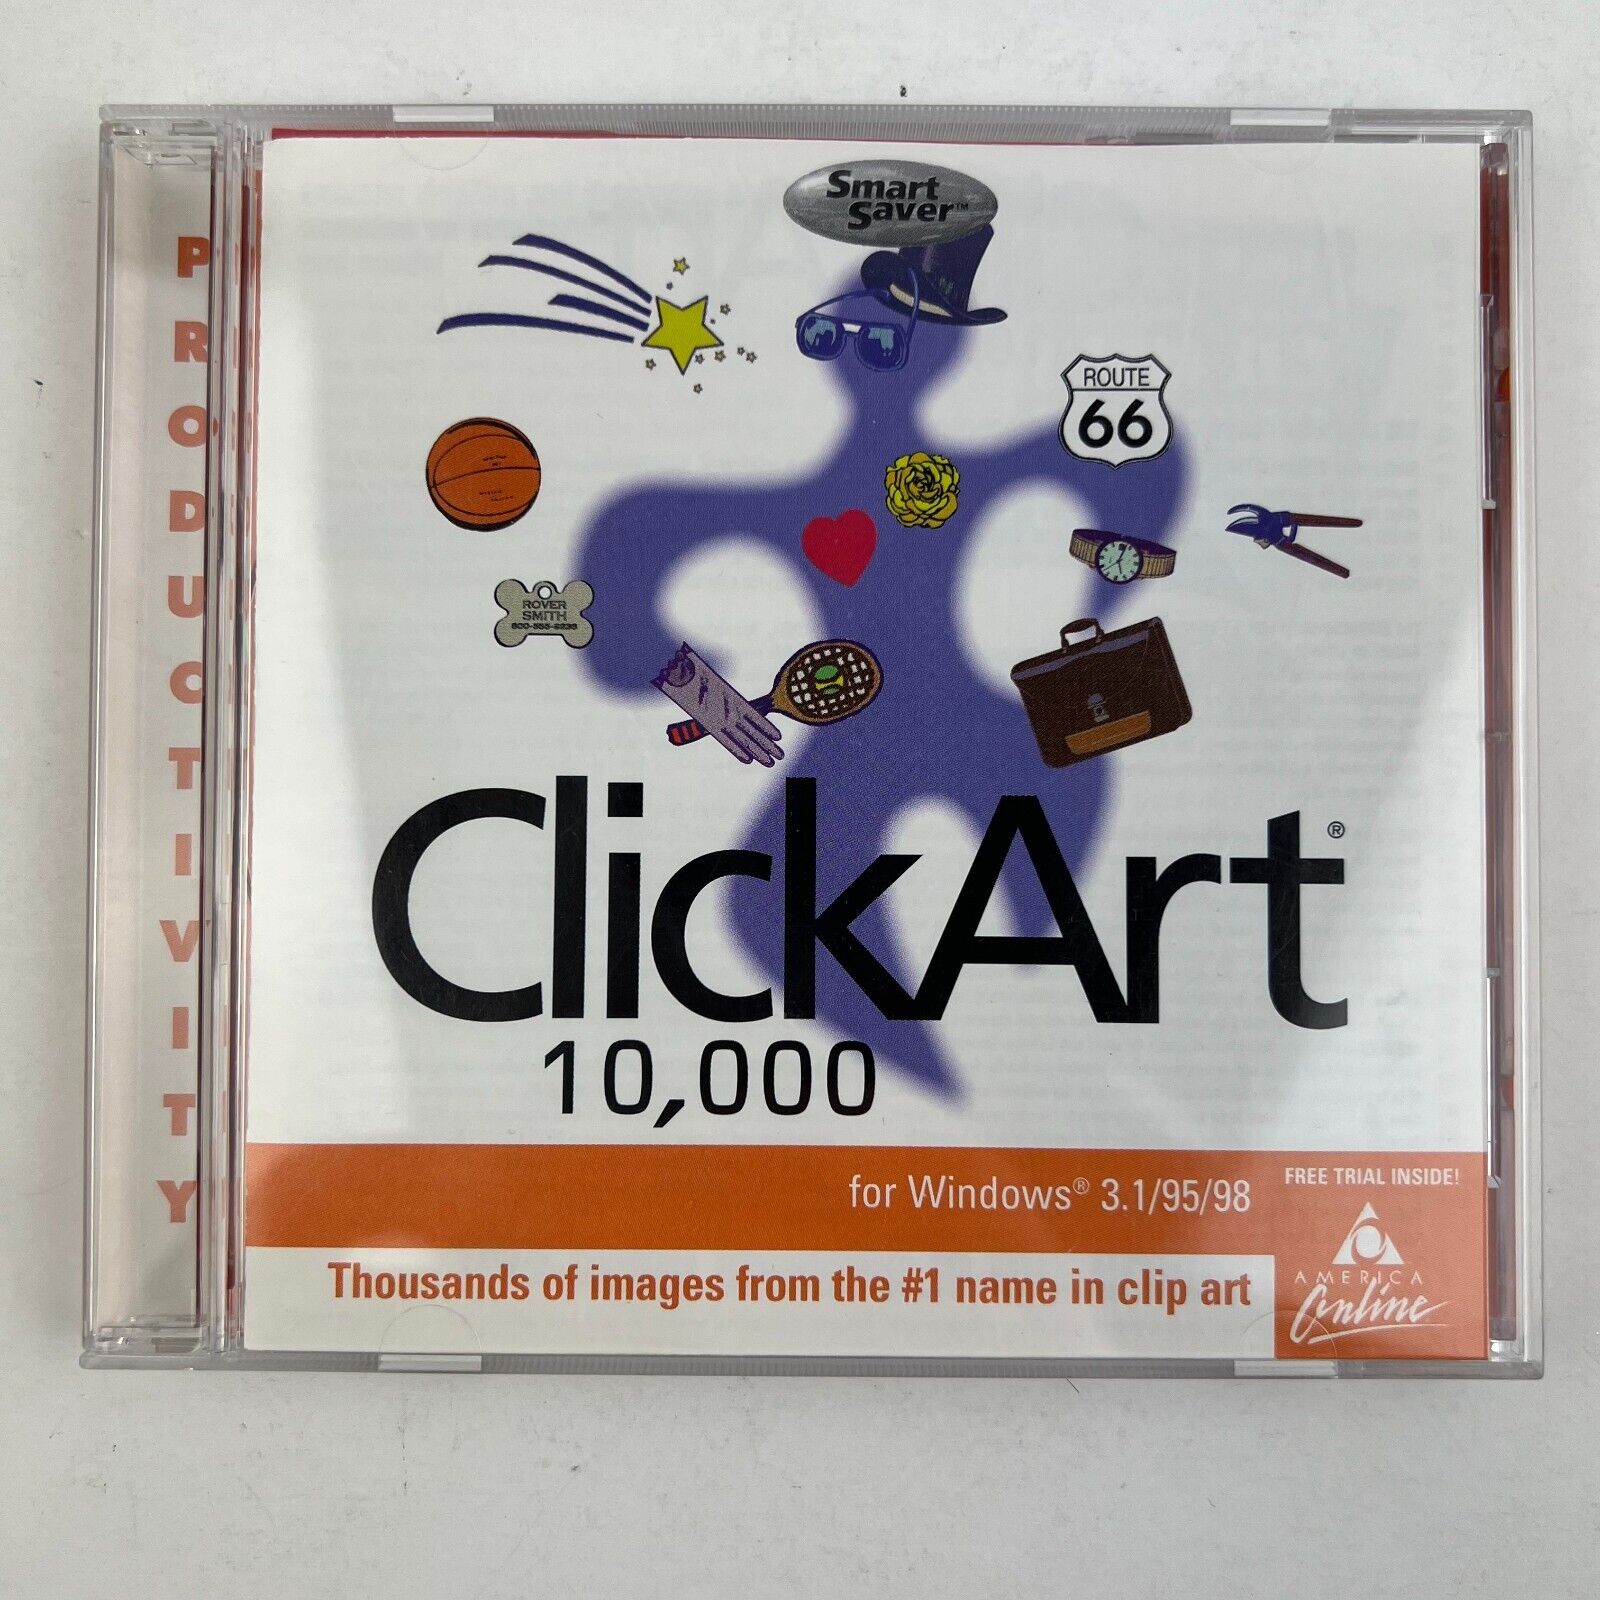 ClickArt 10,000 PC CD-ROM Productivity Software